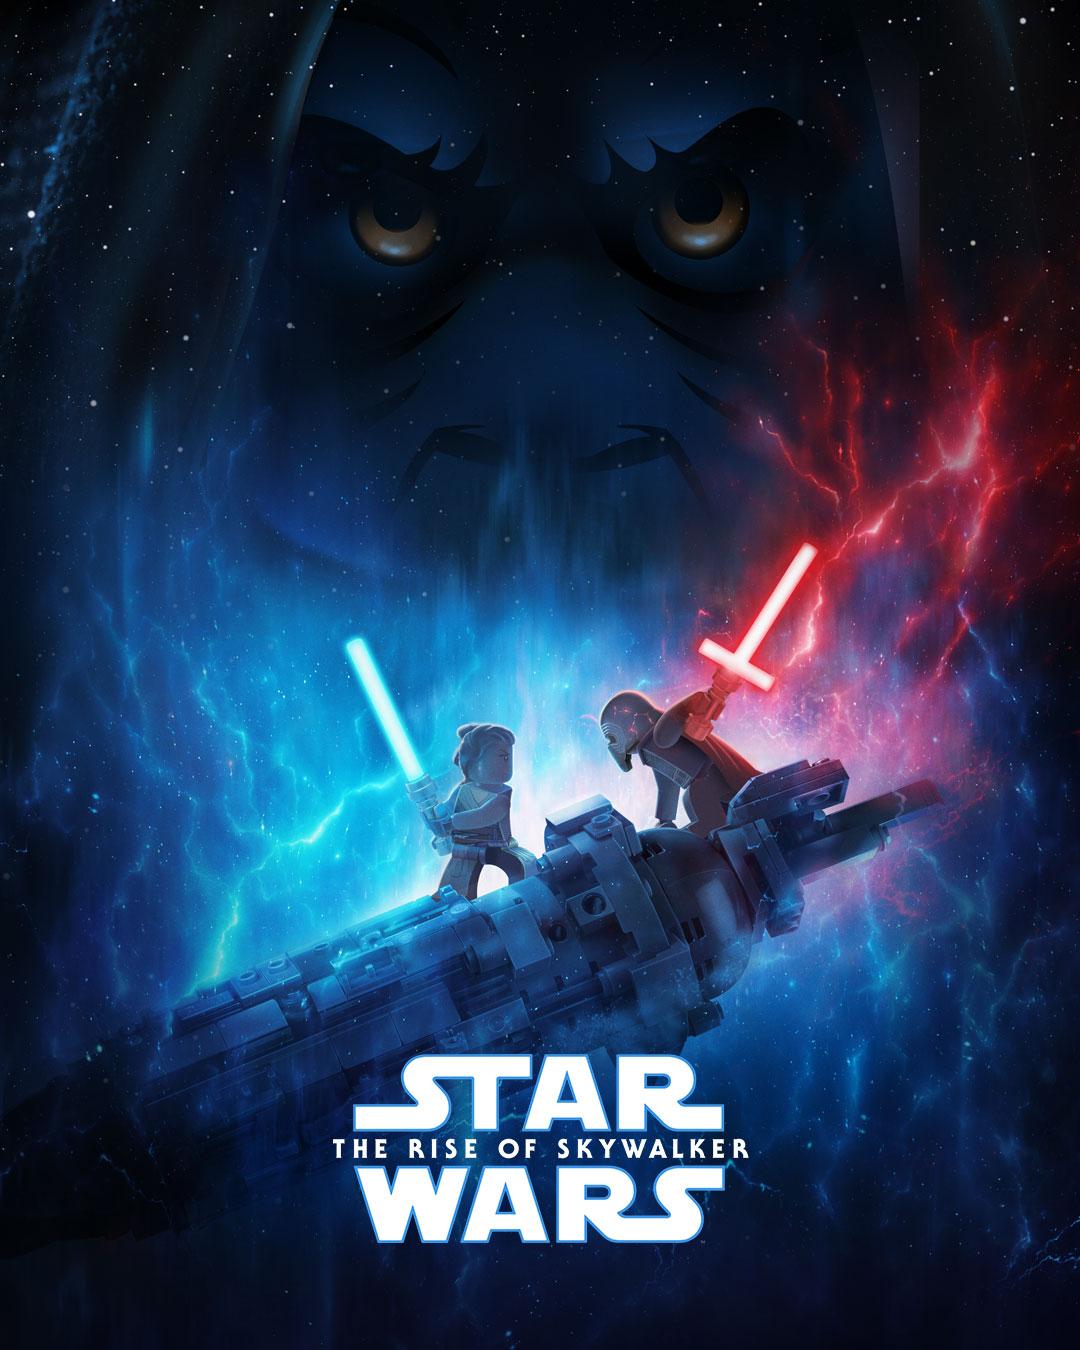 lego star wars the rise of skywalker sets release date